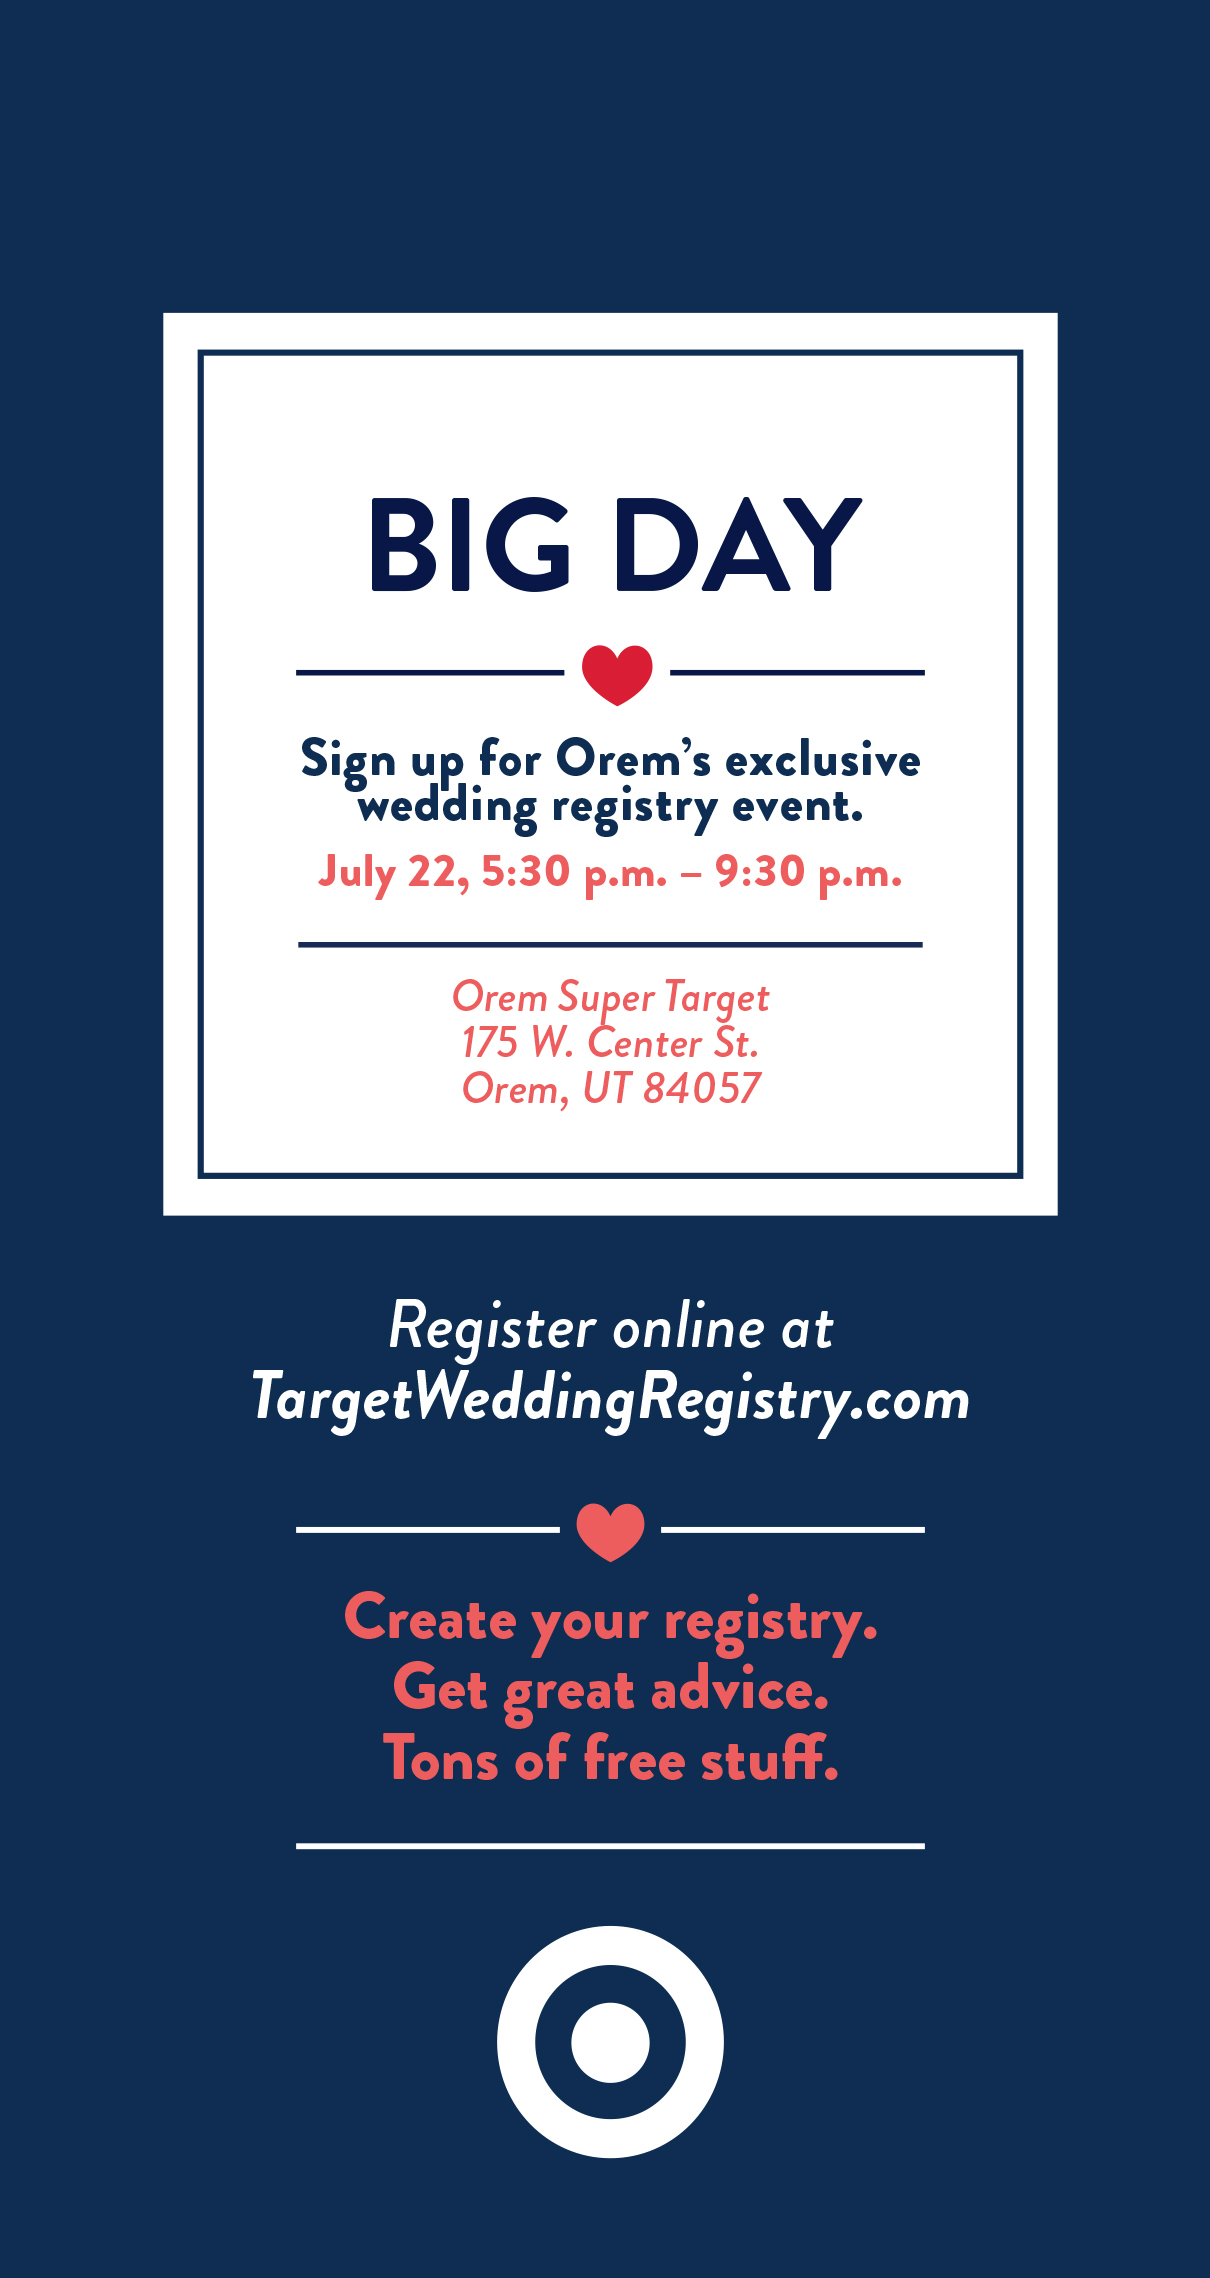 Free Stuff + Target Registry Event in Orem